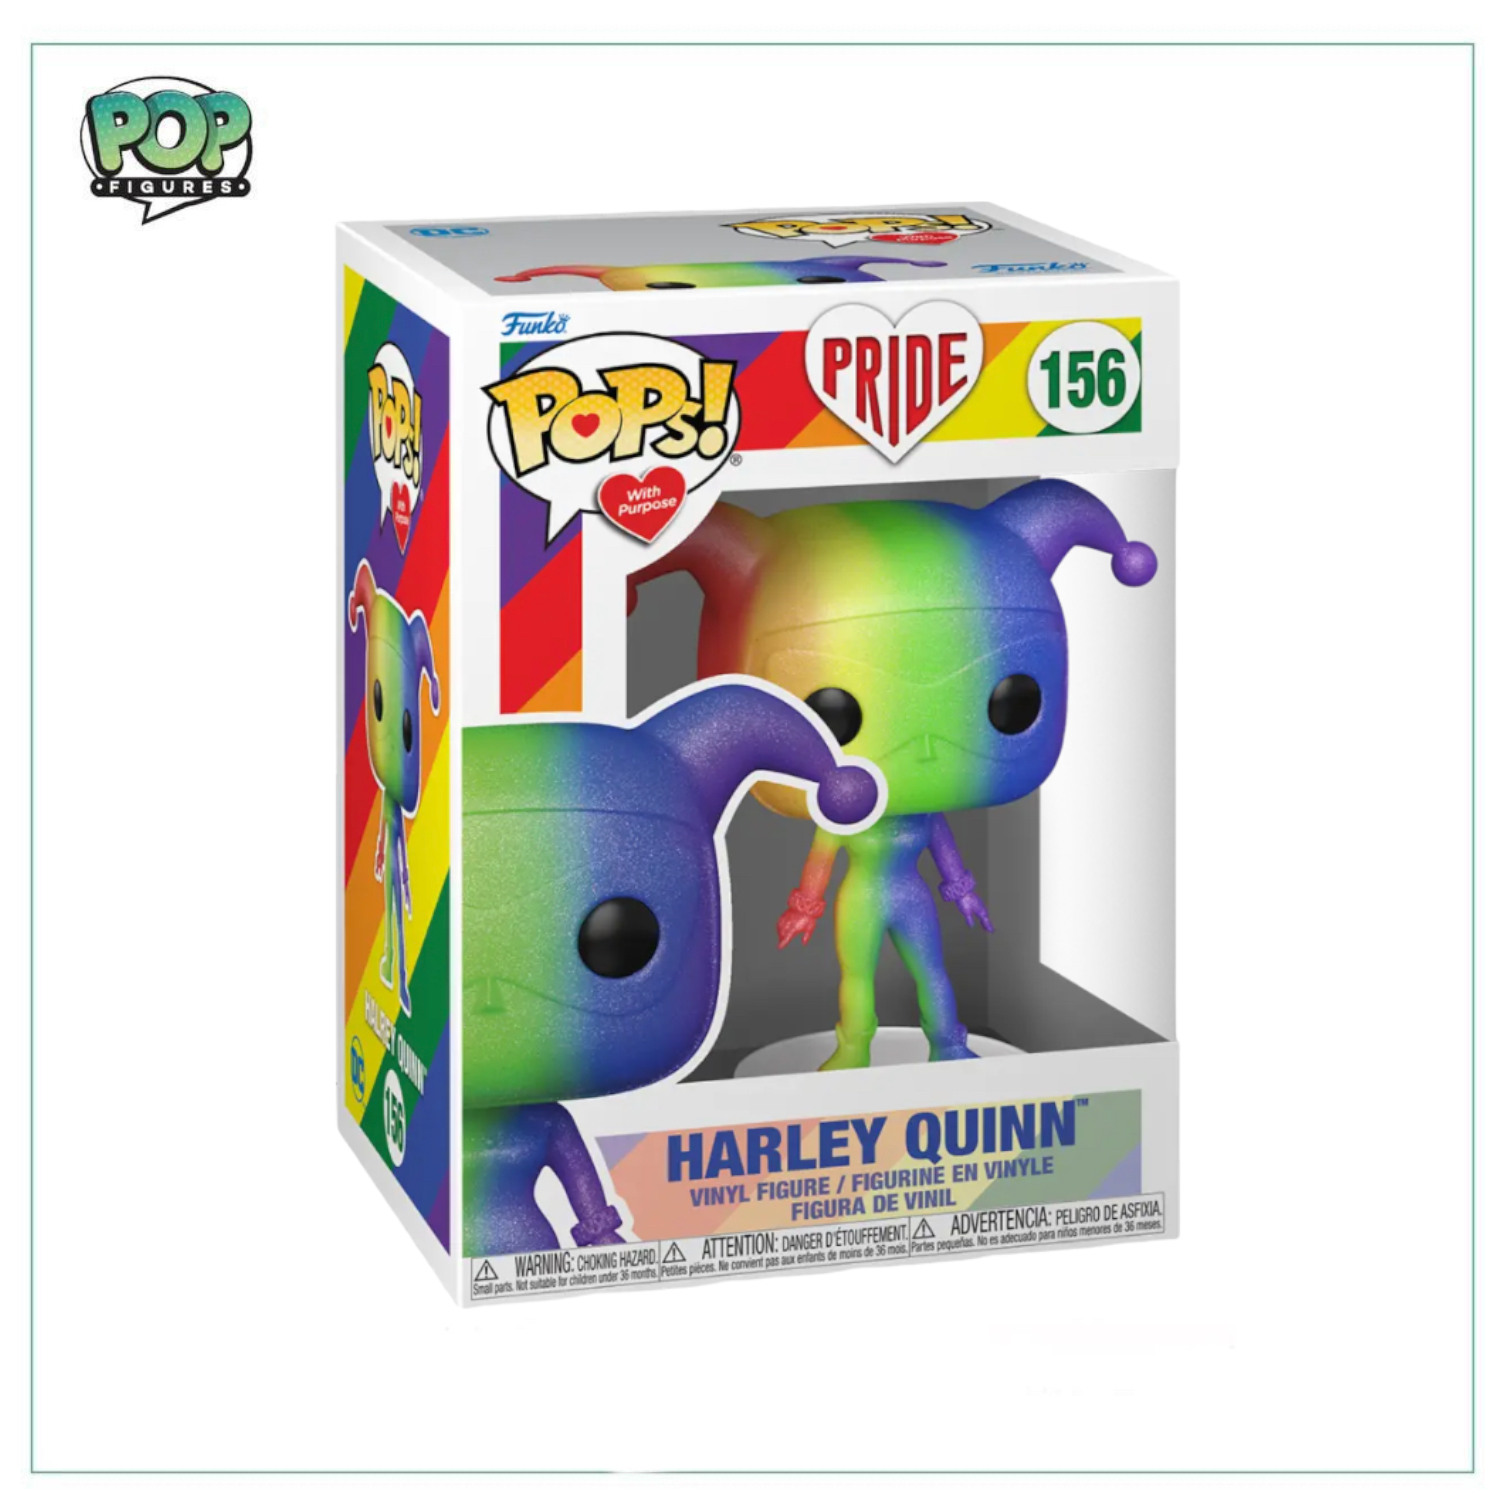 Harley Quinn #156 Funko Pop! - Pride - DC